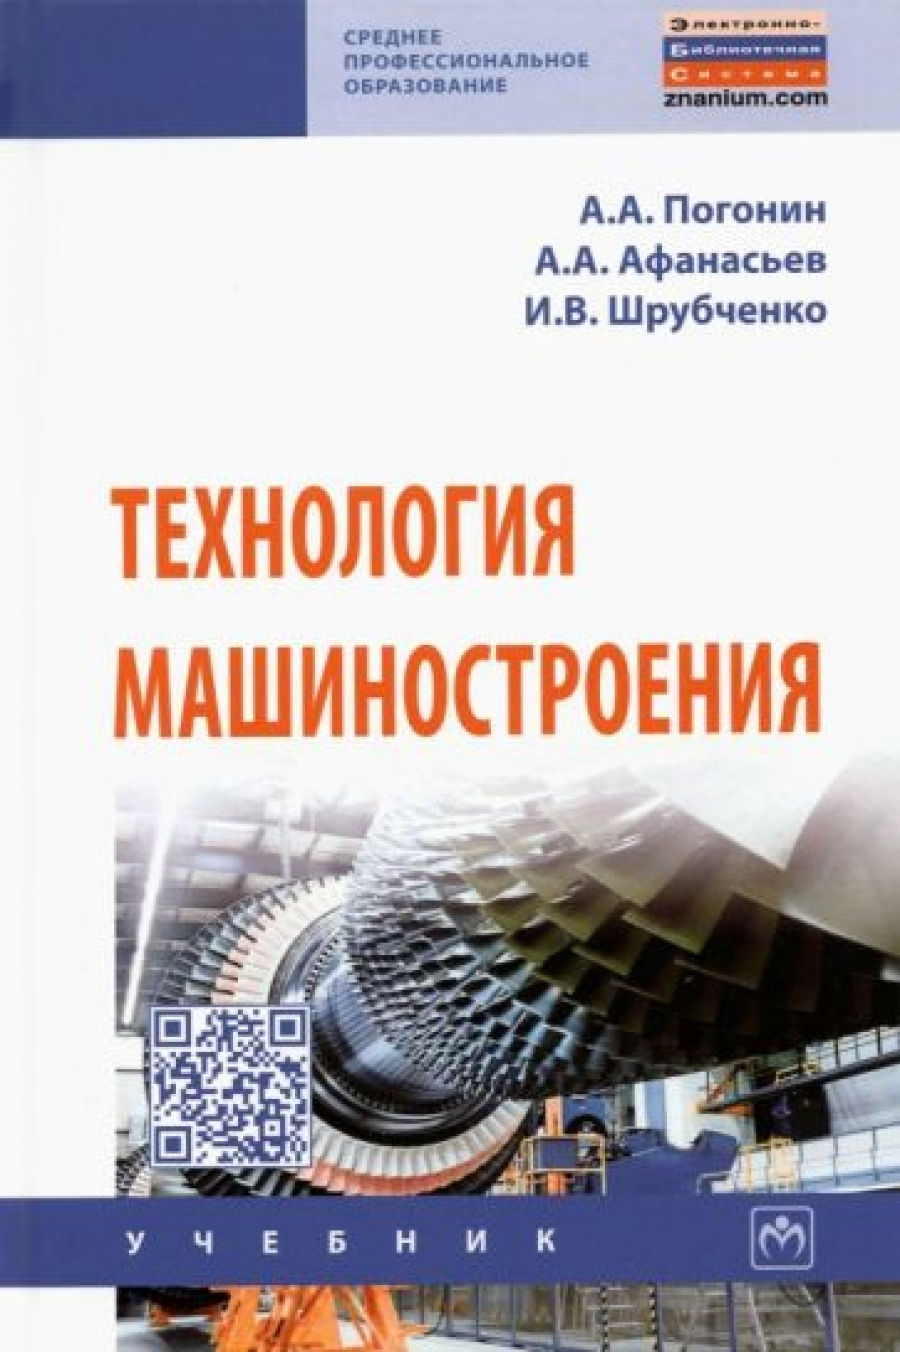 Погонин А.А., Афанасьев А.А., Шрубченко И.В. Технология машиностроения 